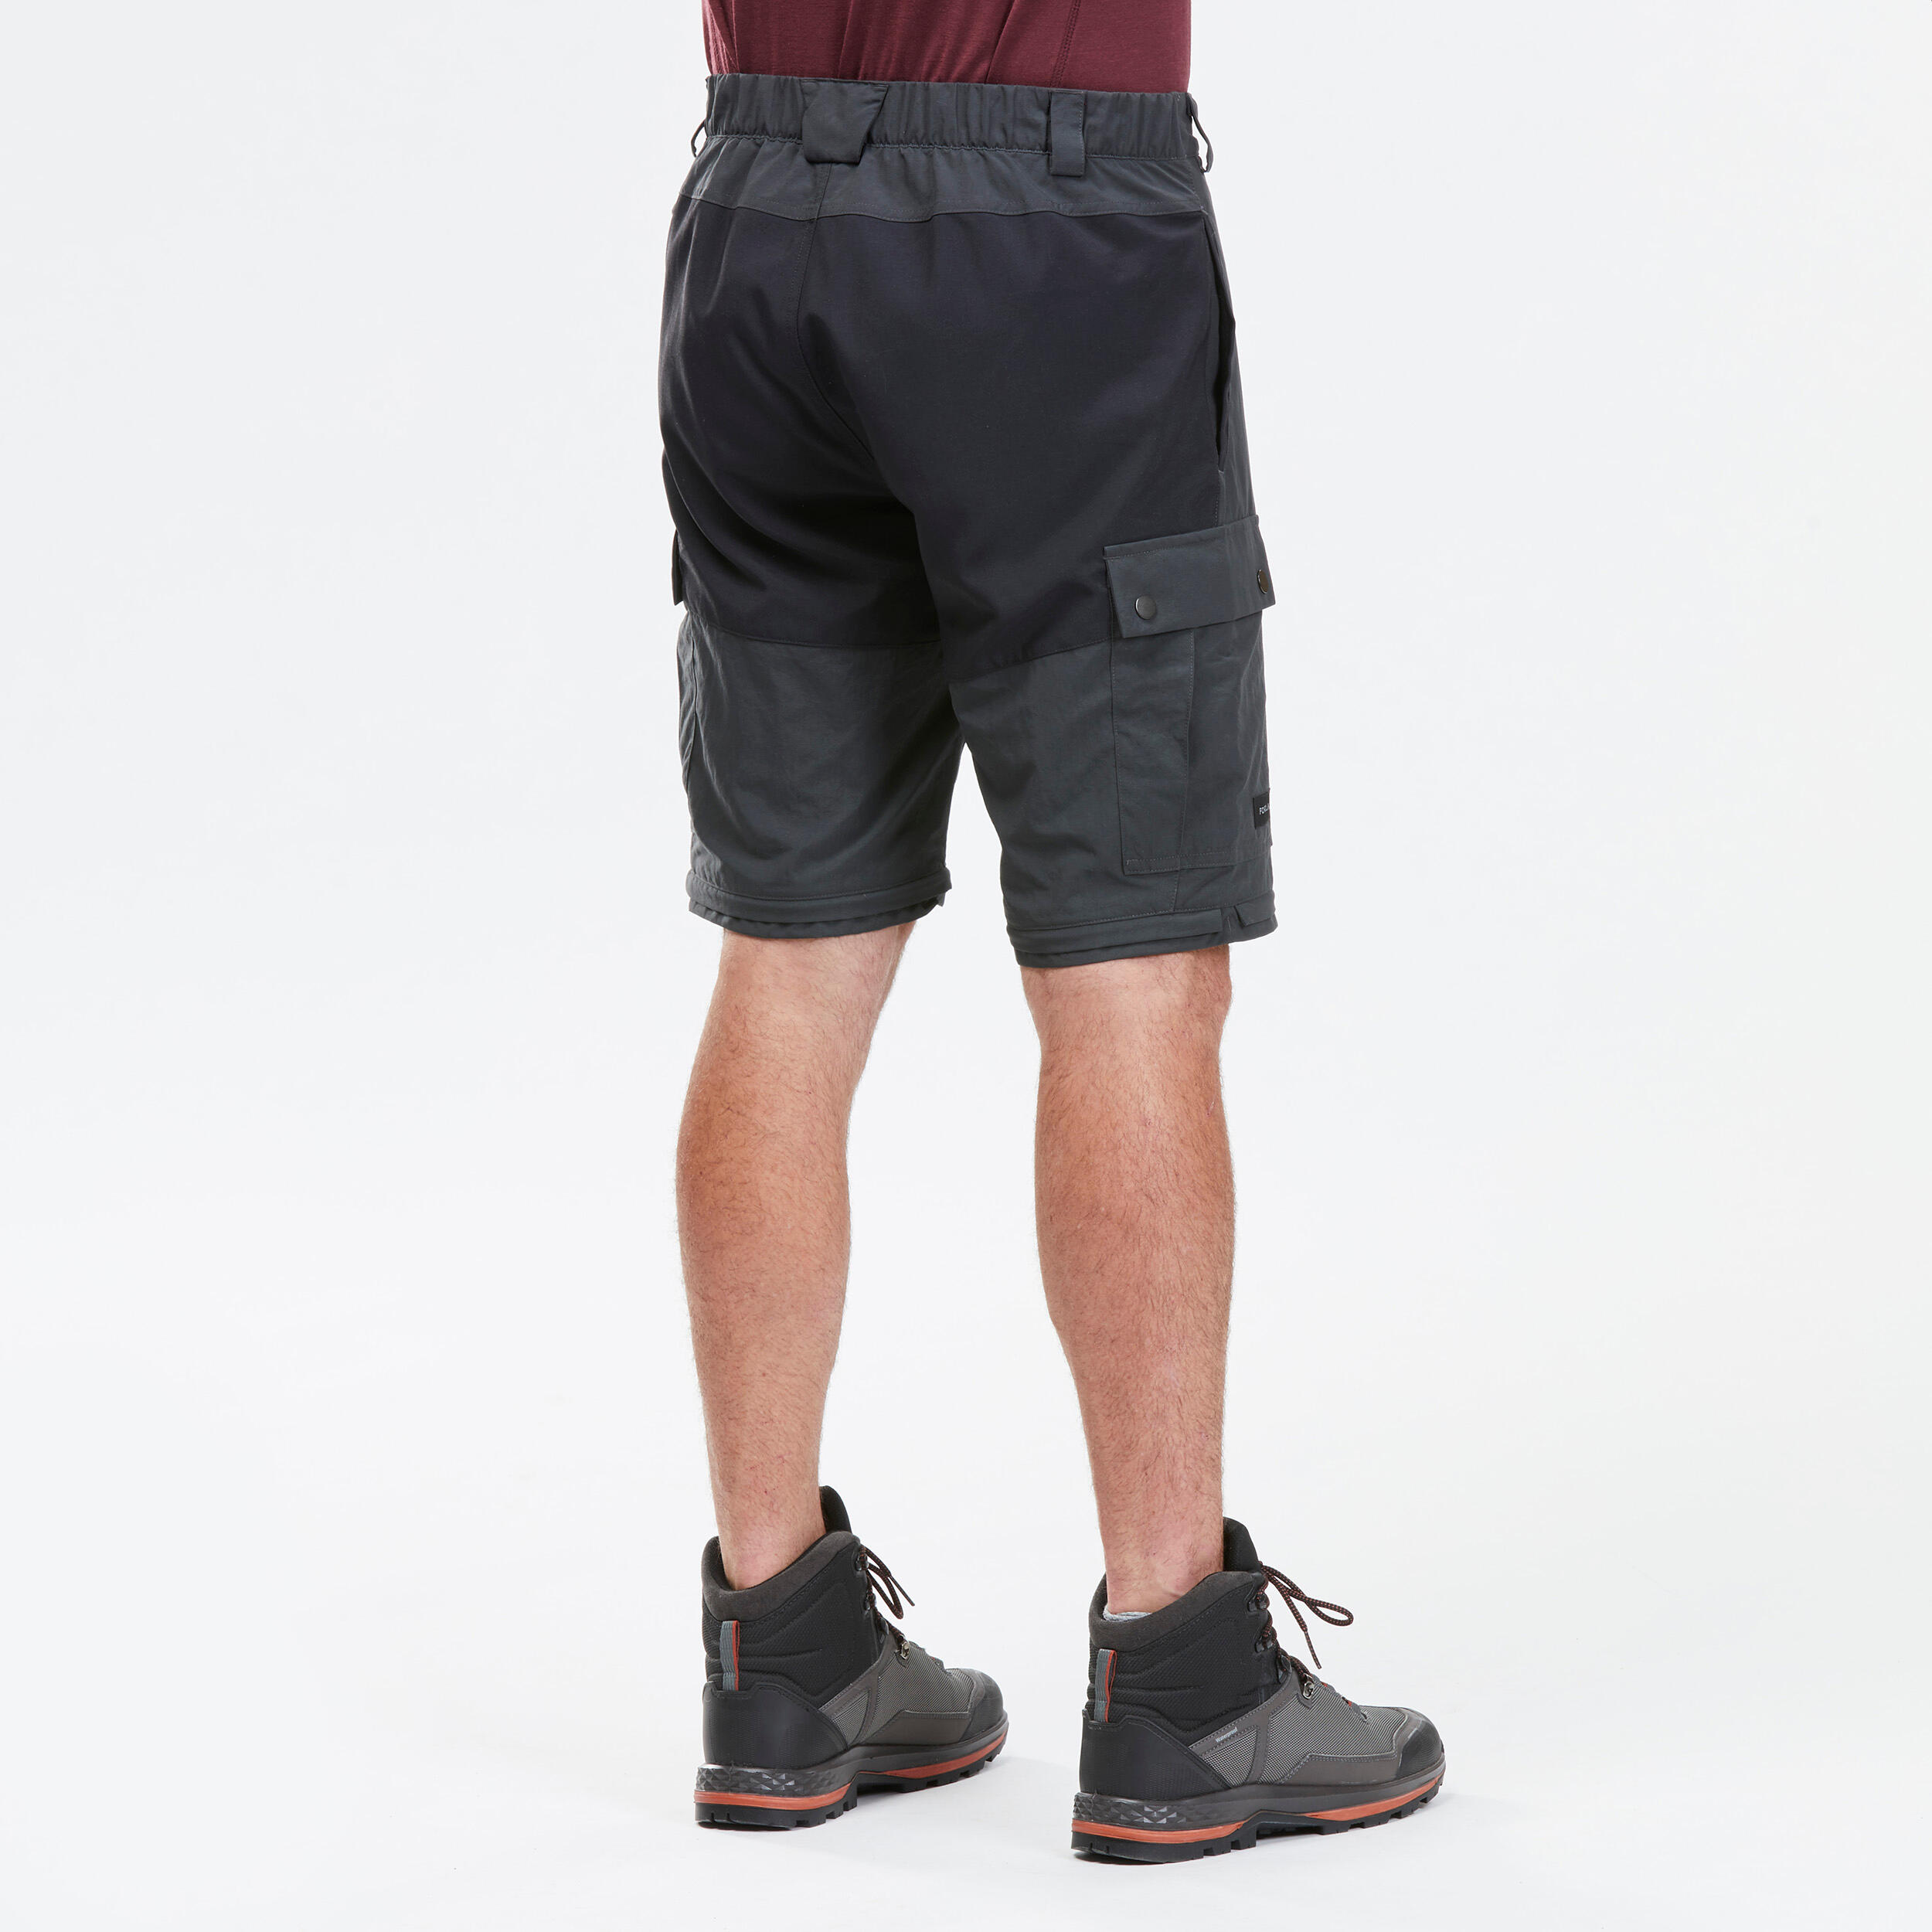 Shorts for Men | Costco